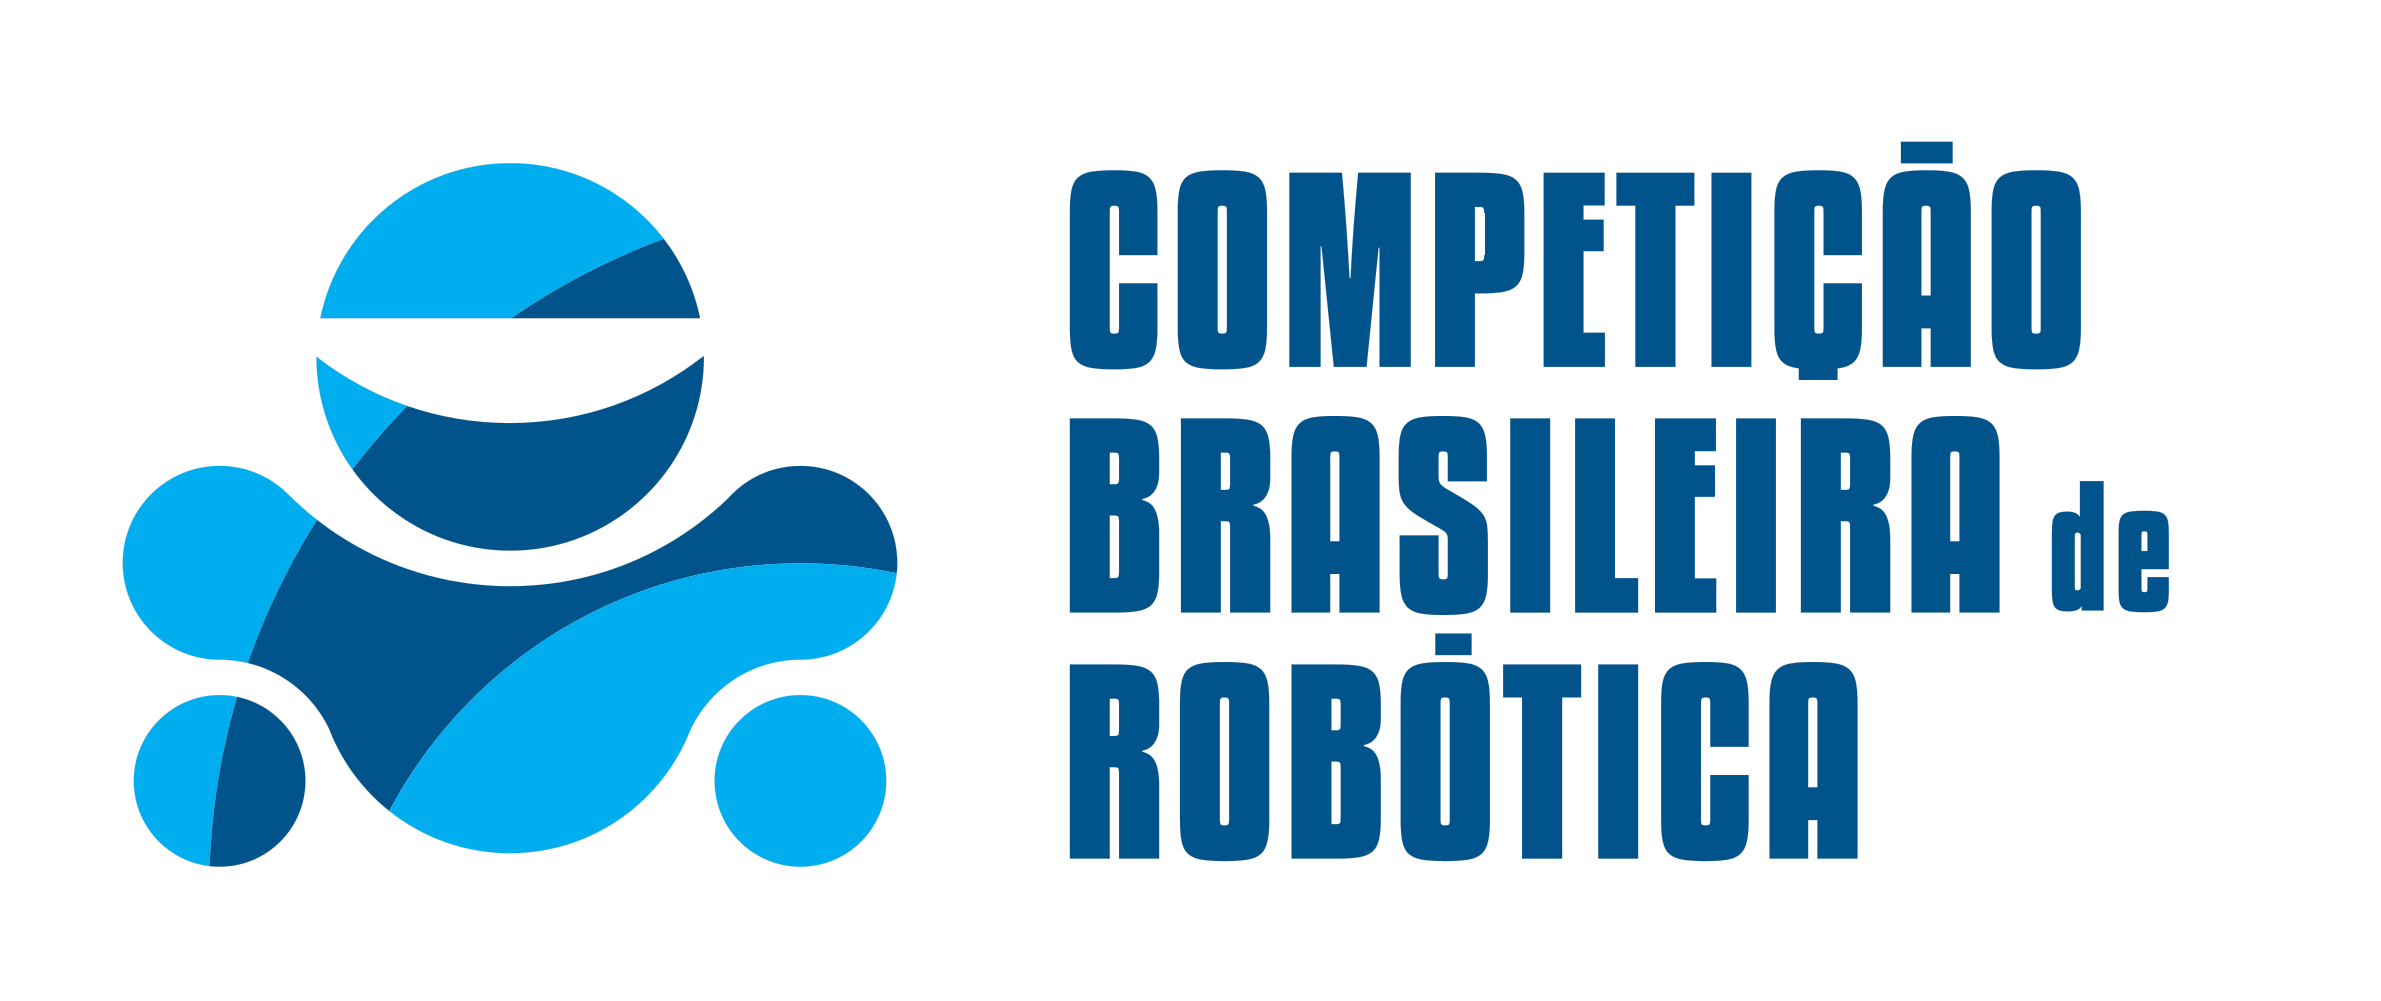 Google Competition 2018 Logo - Latin American and Brazilian Robotics Competition 2018. November 6